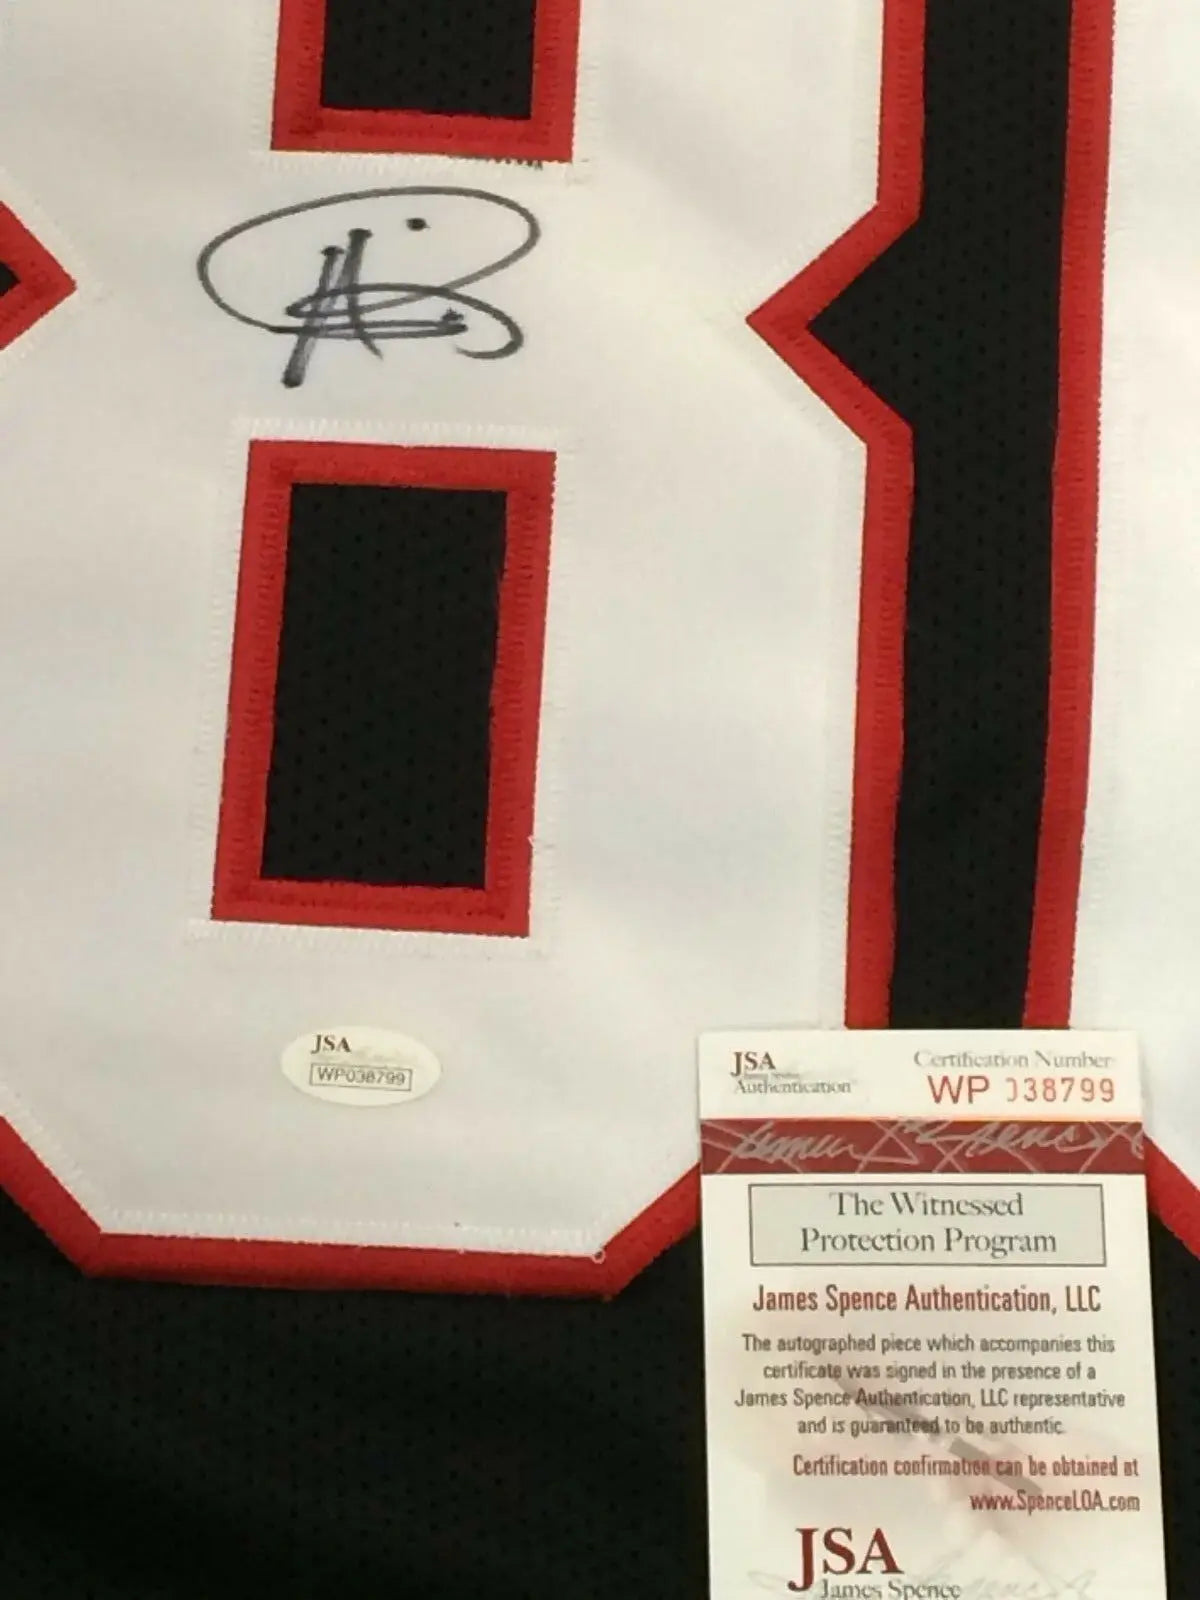 MVP Authentics Andre Rison Autographed Signed  Atlanta Falcons Jersey Jsa Coa 98.10 sports jersey framing , jersey framing